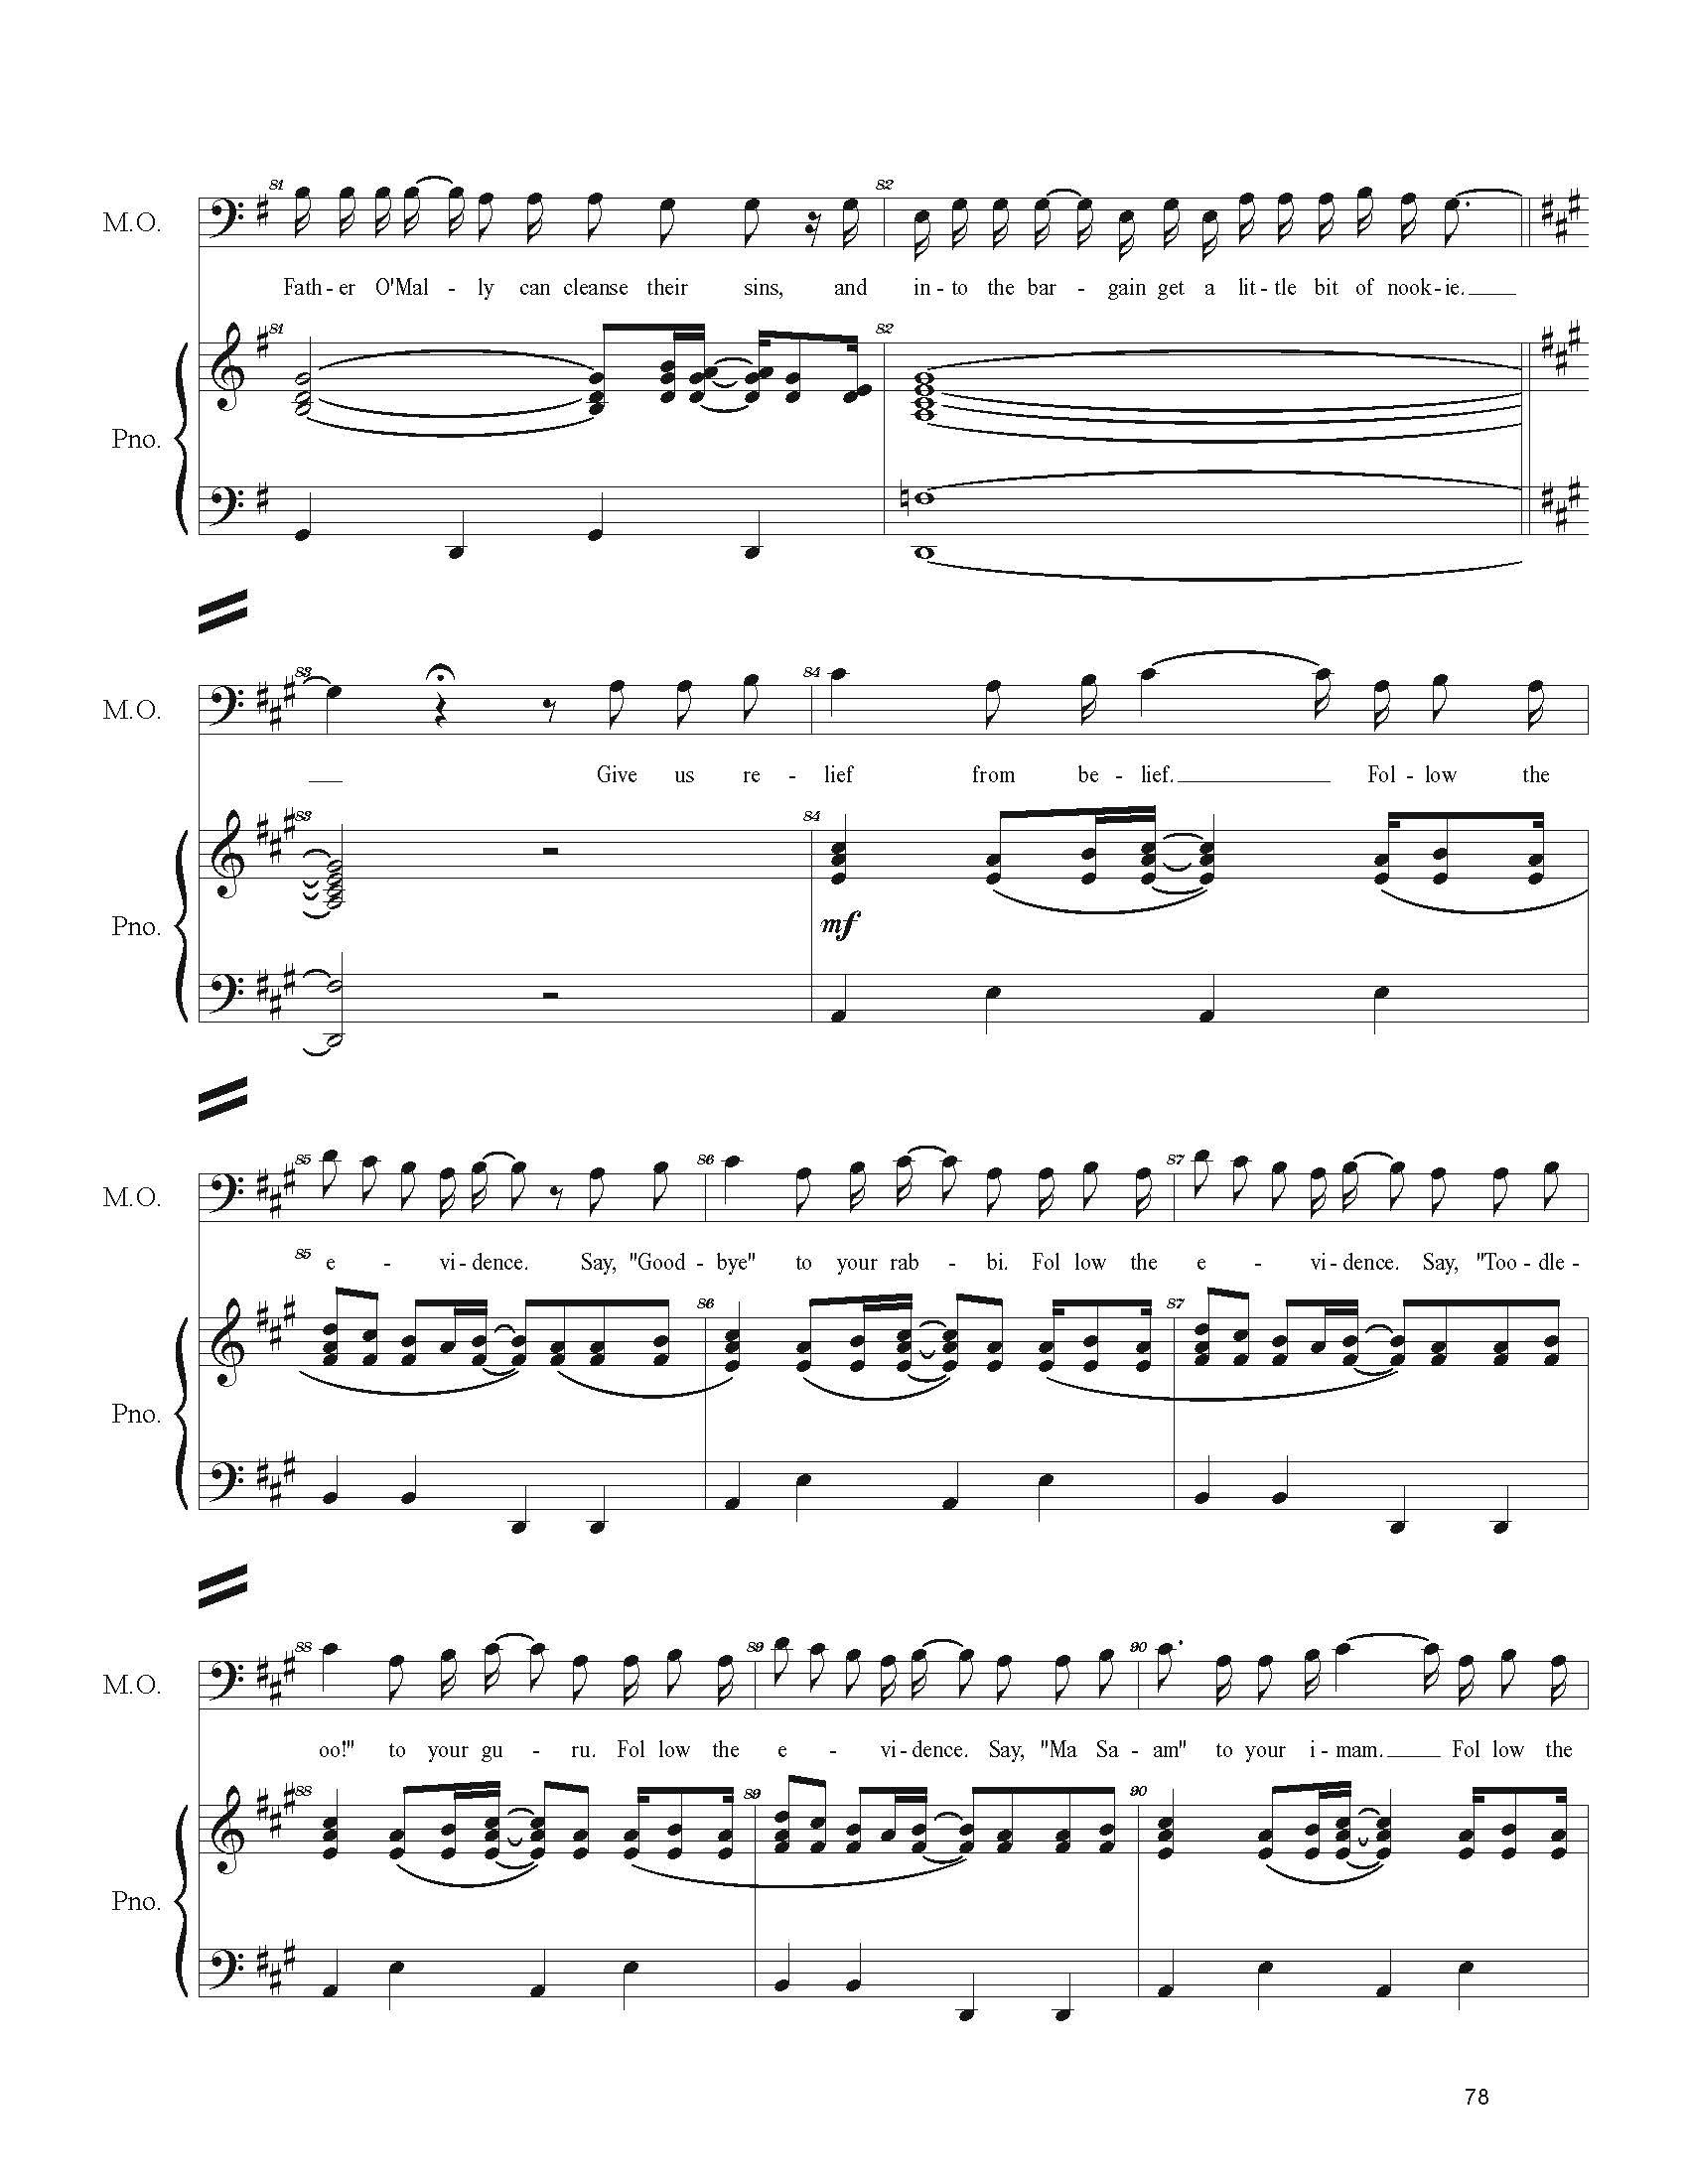 FULL PIANO VOCAL SCORE DRAFT 1 - Score_Page_078.jpg